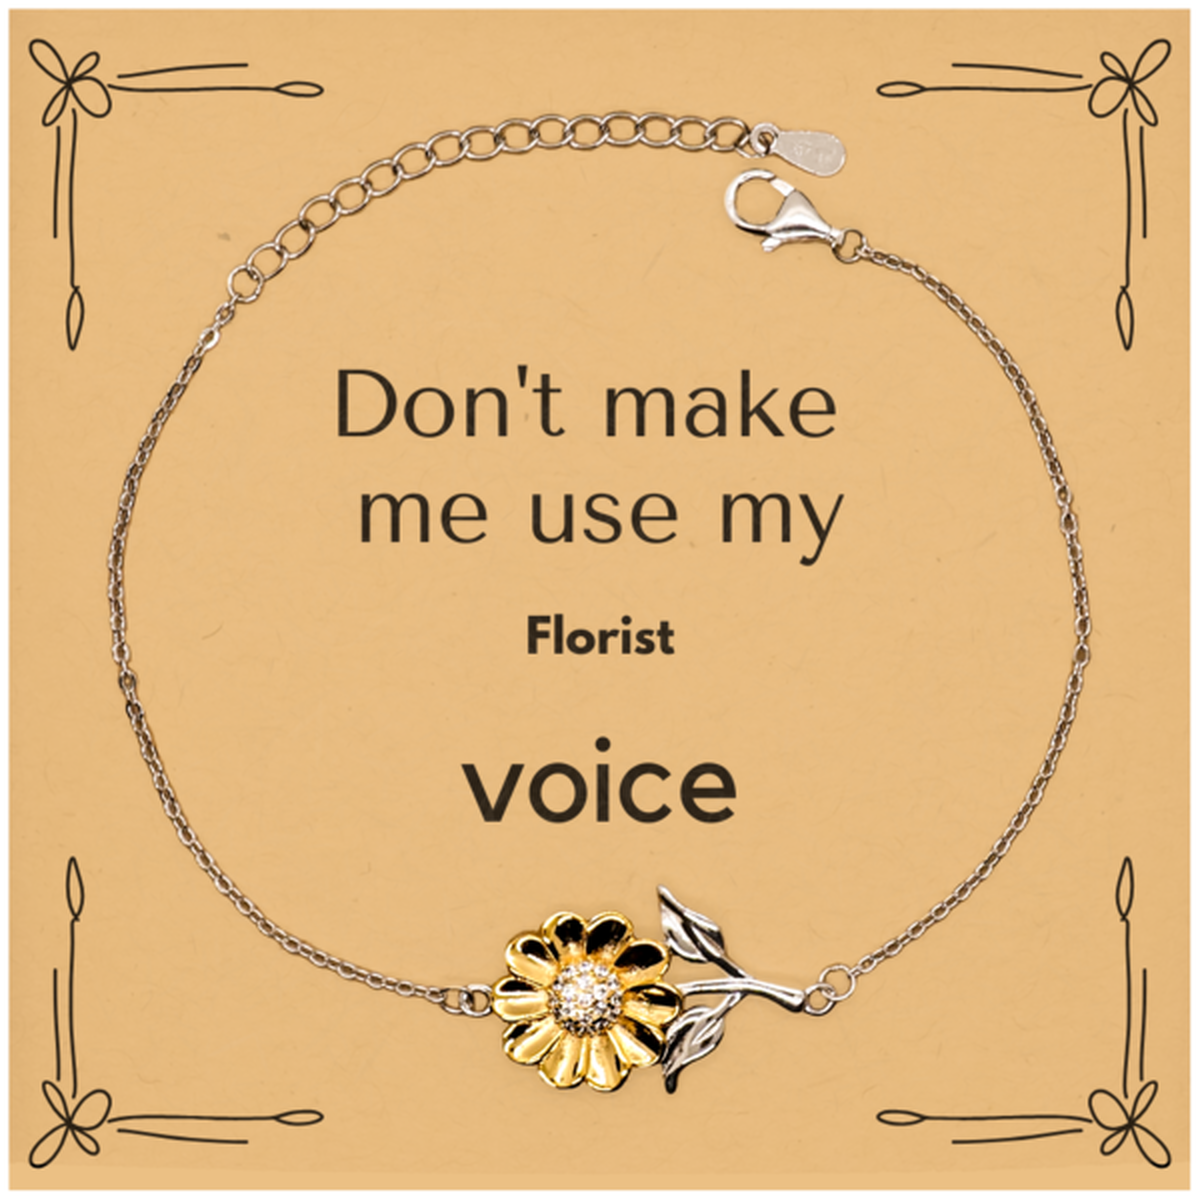 Don't make me use my Florist voice, Sarcasm Florist Card Gifts, Christmas Florist Sunflower Bracelet Birthday Unique Gifts For Florist Coworkers, Men, Women, Colleague, Friends